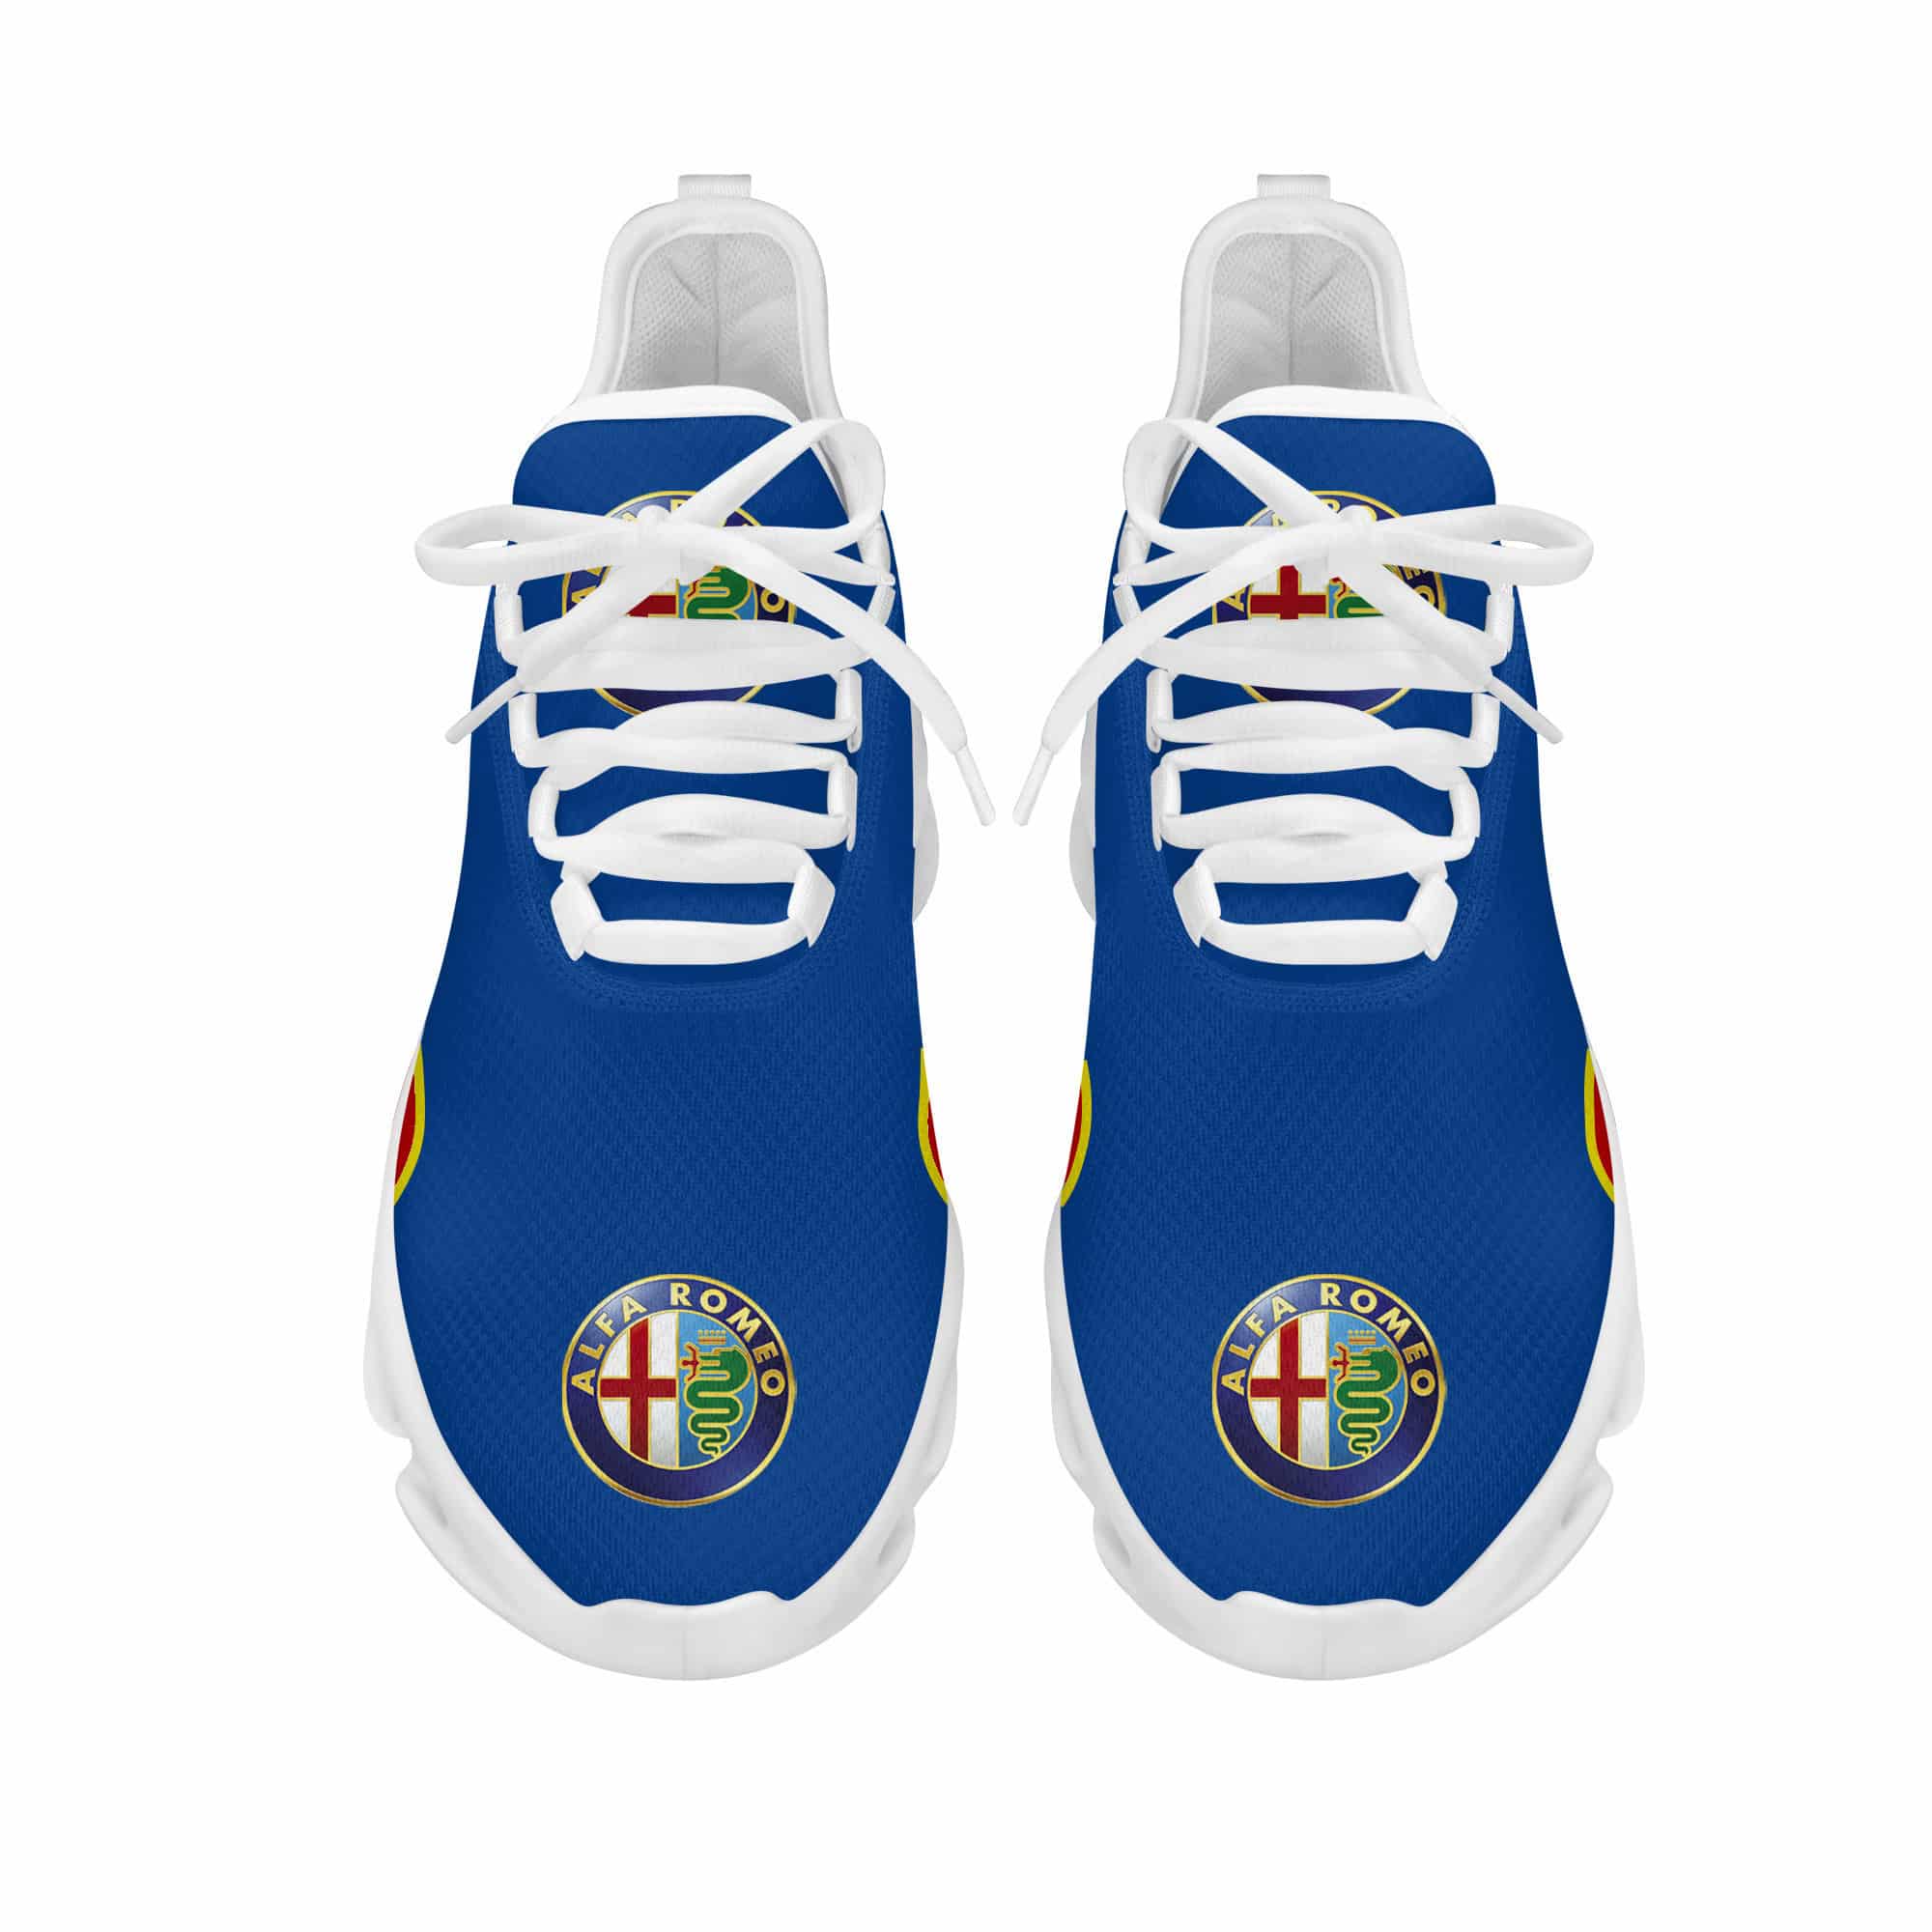 Alfa Romeo Running Shoes Max Soul Shoes Sneakers Ver 7 4